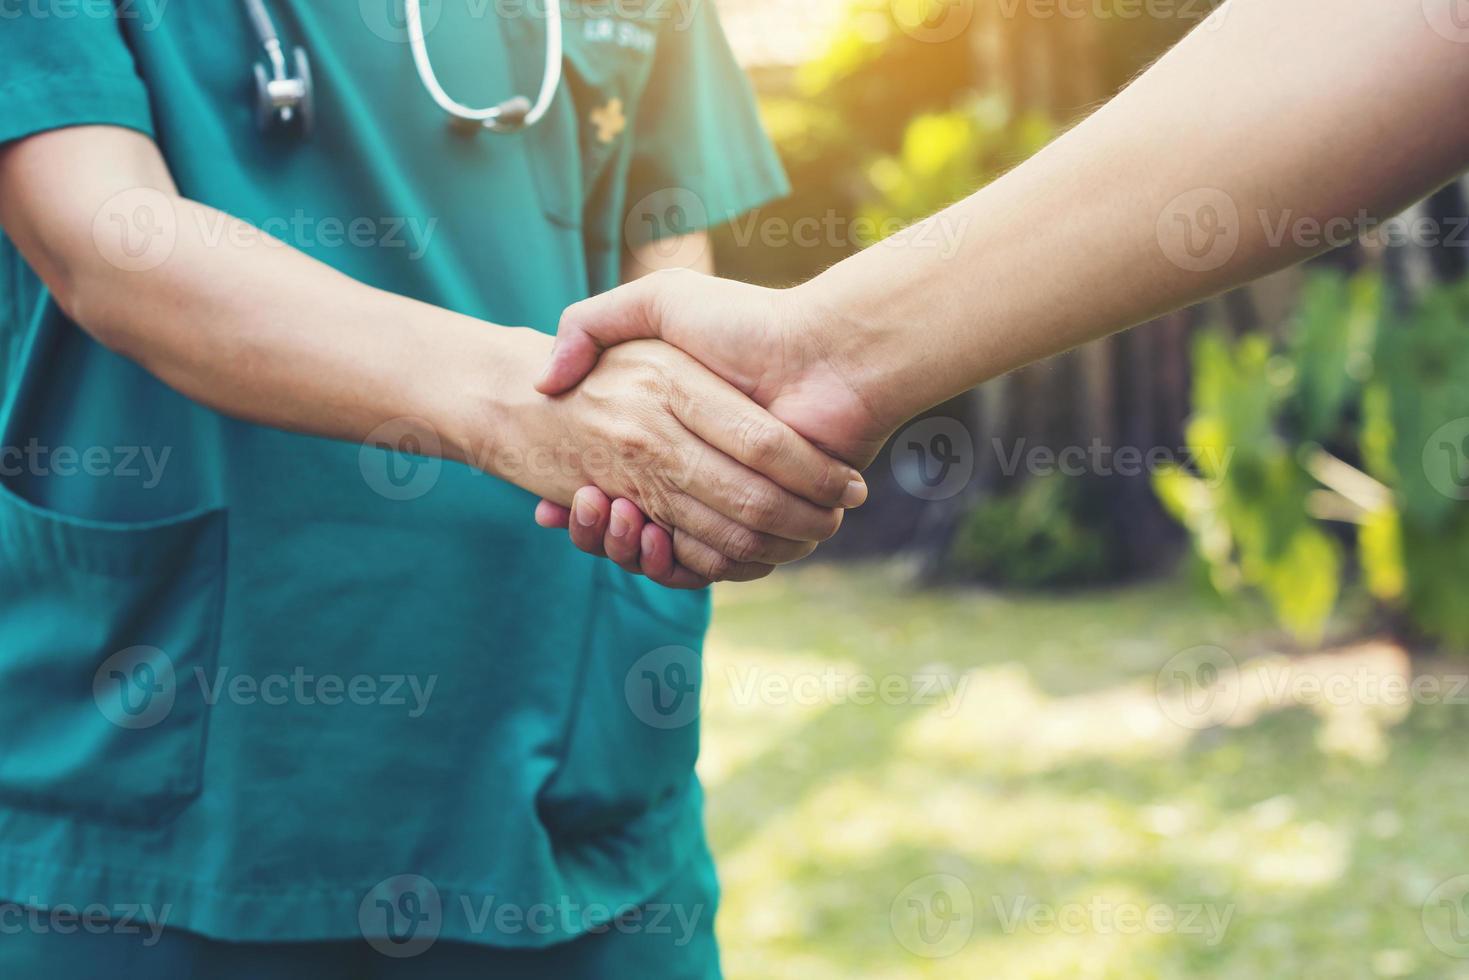 handdruk tussen dokter groene doek en patiënt foto